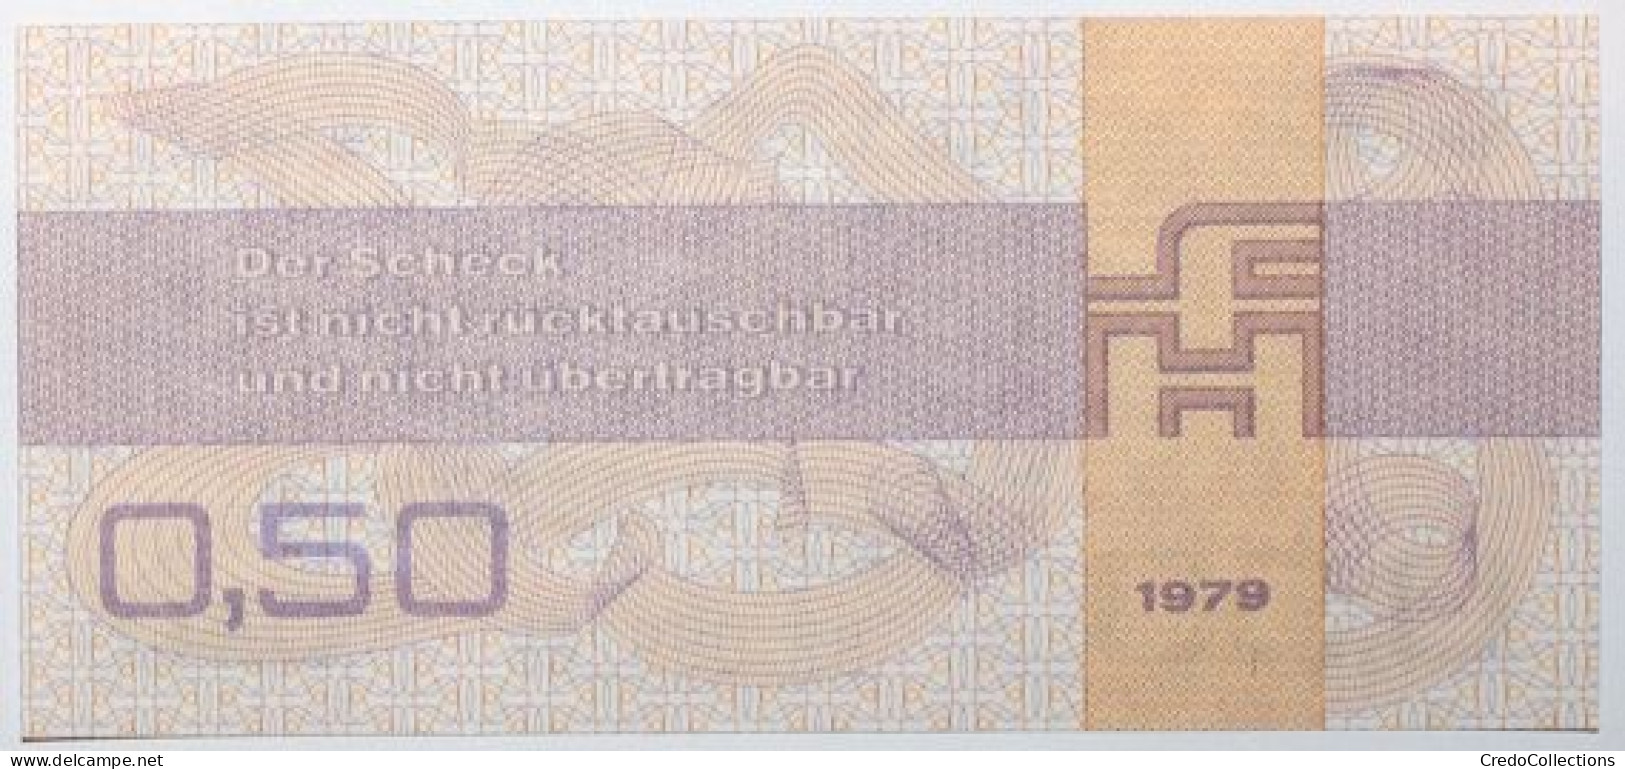 Allemagne De L'Est - 50 Pfennig - 1979 - PICK FX1 - NEUF - Forum-Aussenhandelsgesellschaft MbH